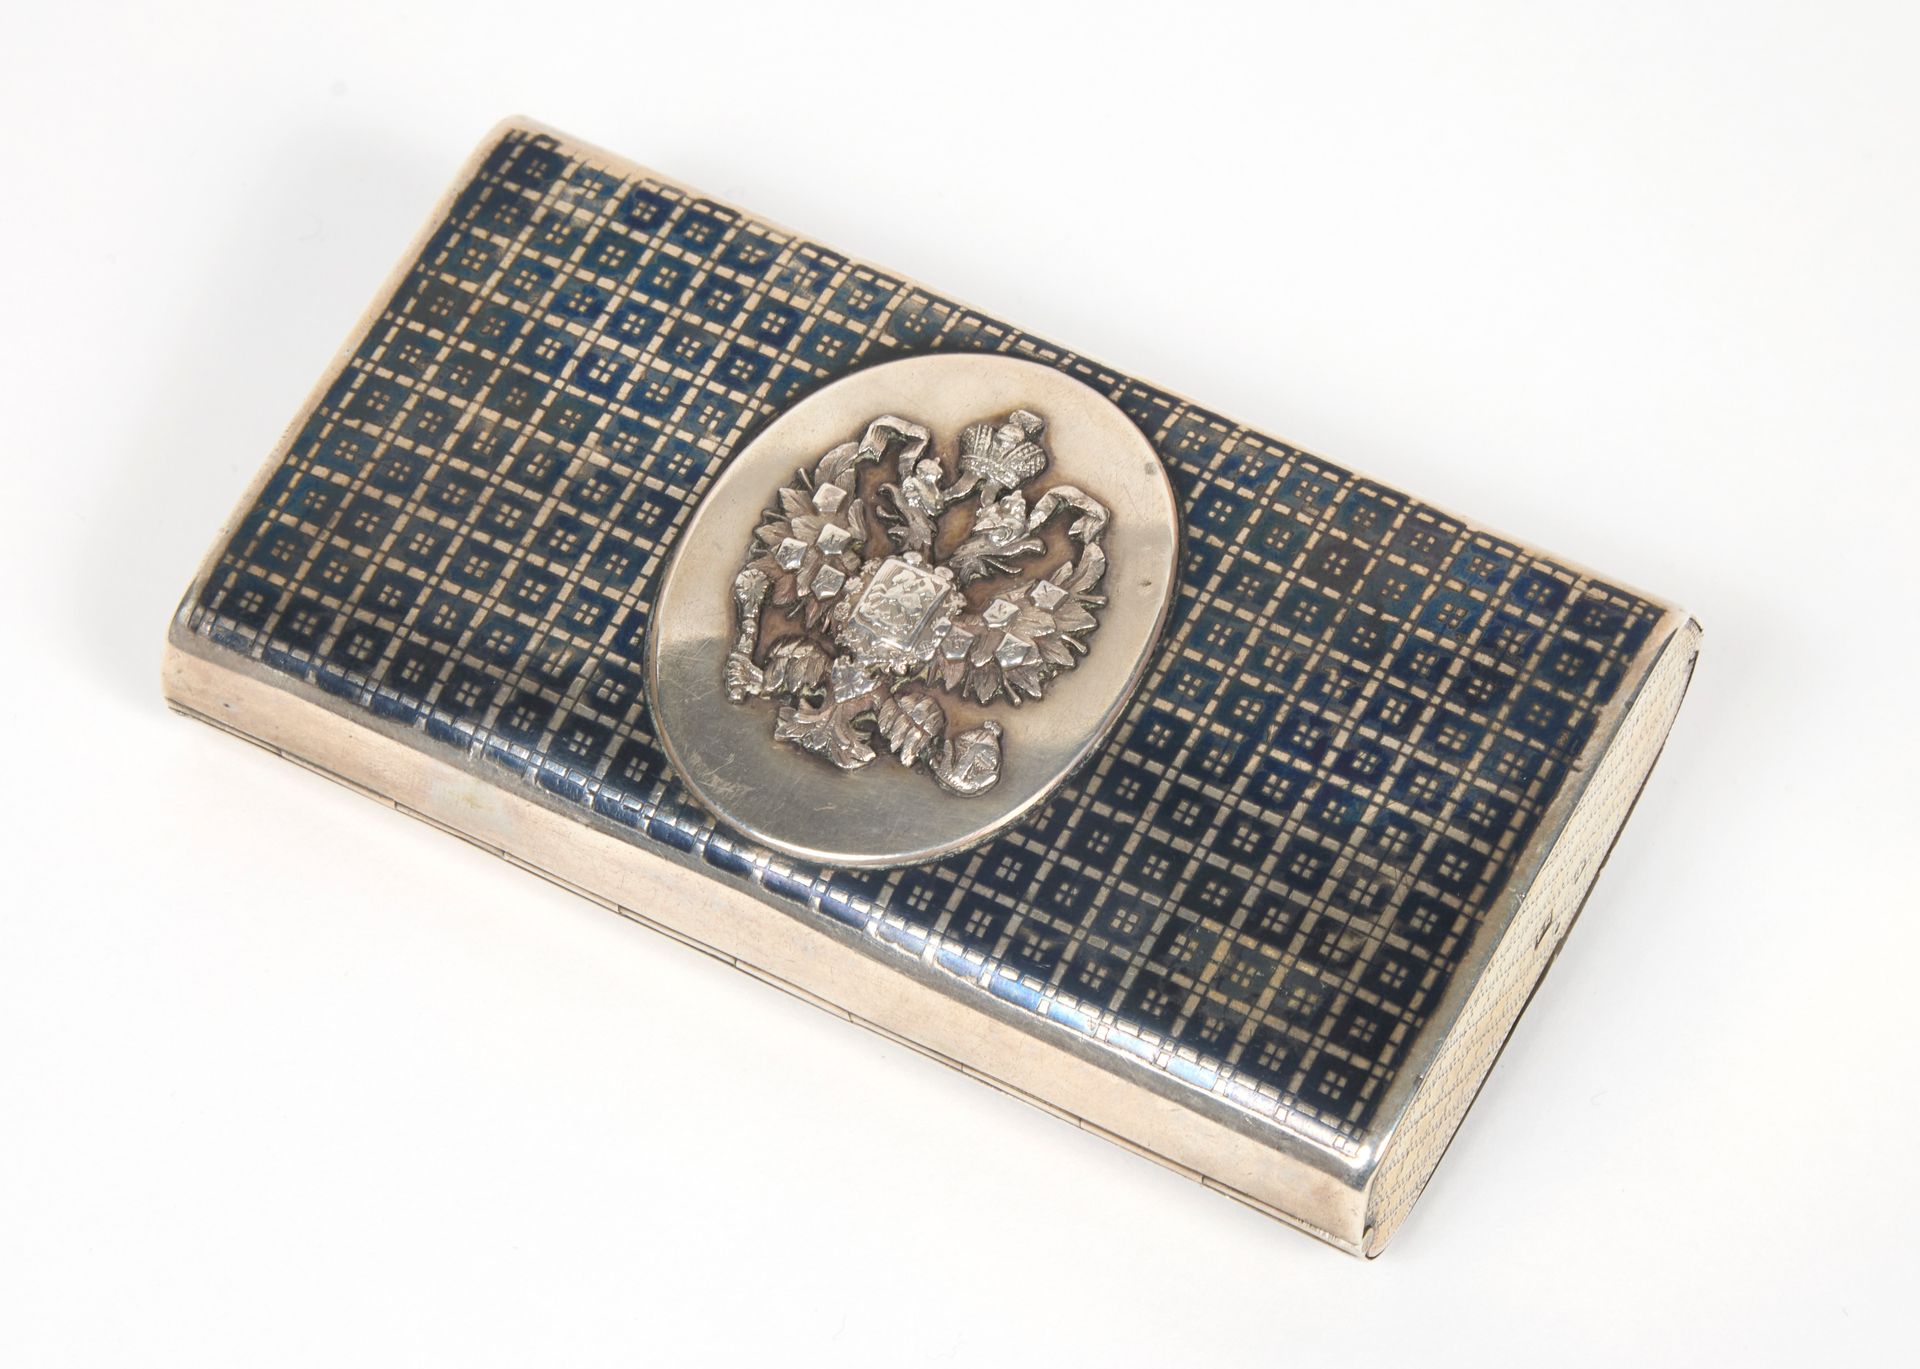 Null Cigarette case, decorated with a double-headed eagle
Silver, chern
Hallmark&hellip;